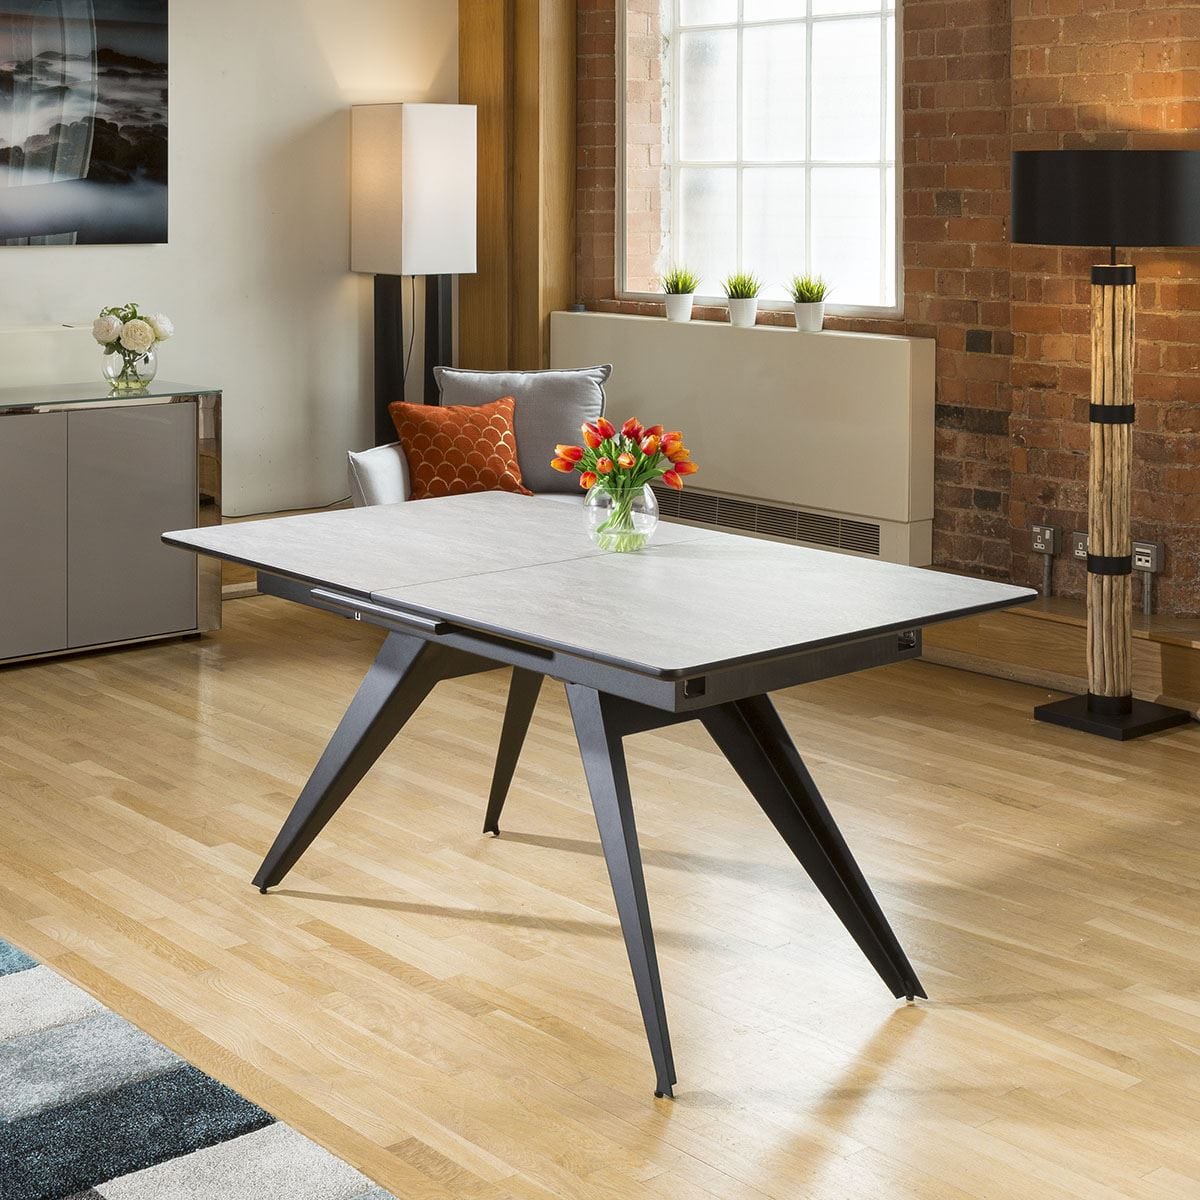 Quatropi Modern Extending Dining Table 160 - 200 Concrete Effect Top Steel legs